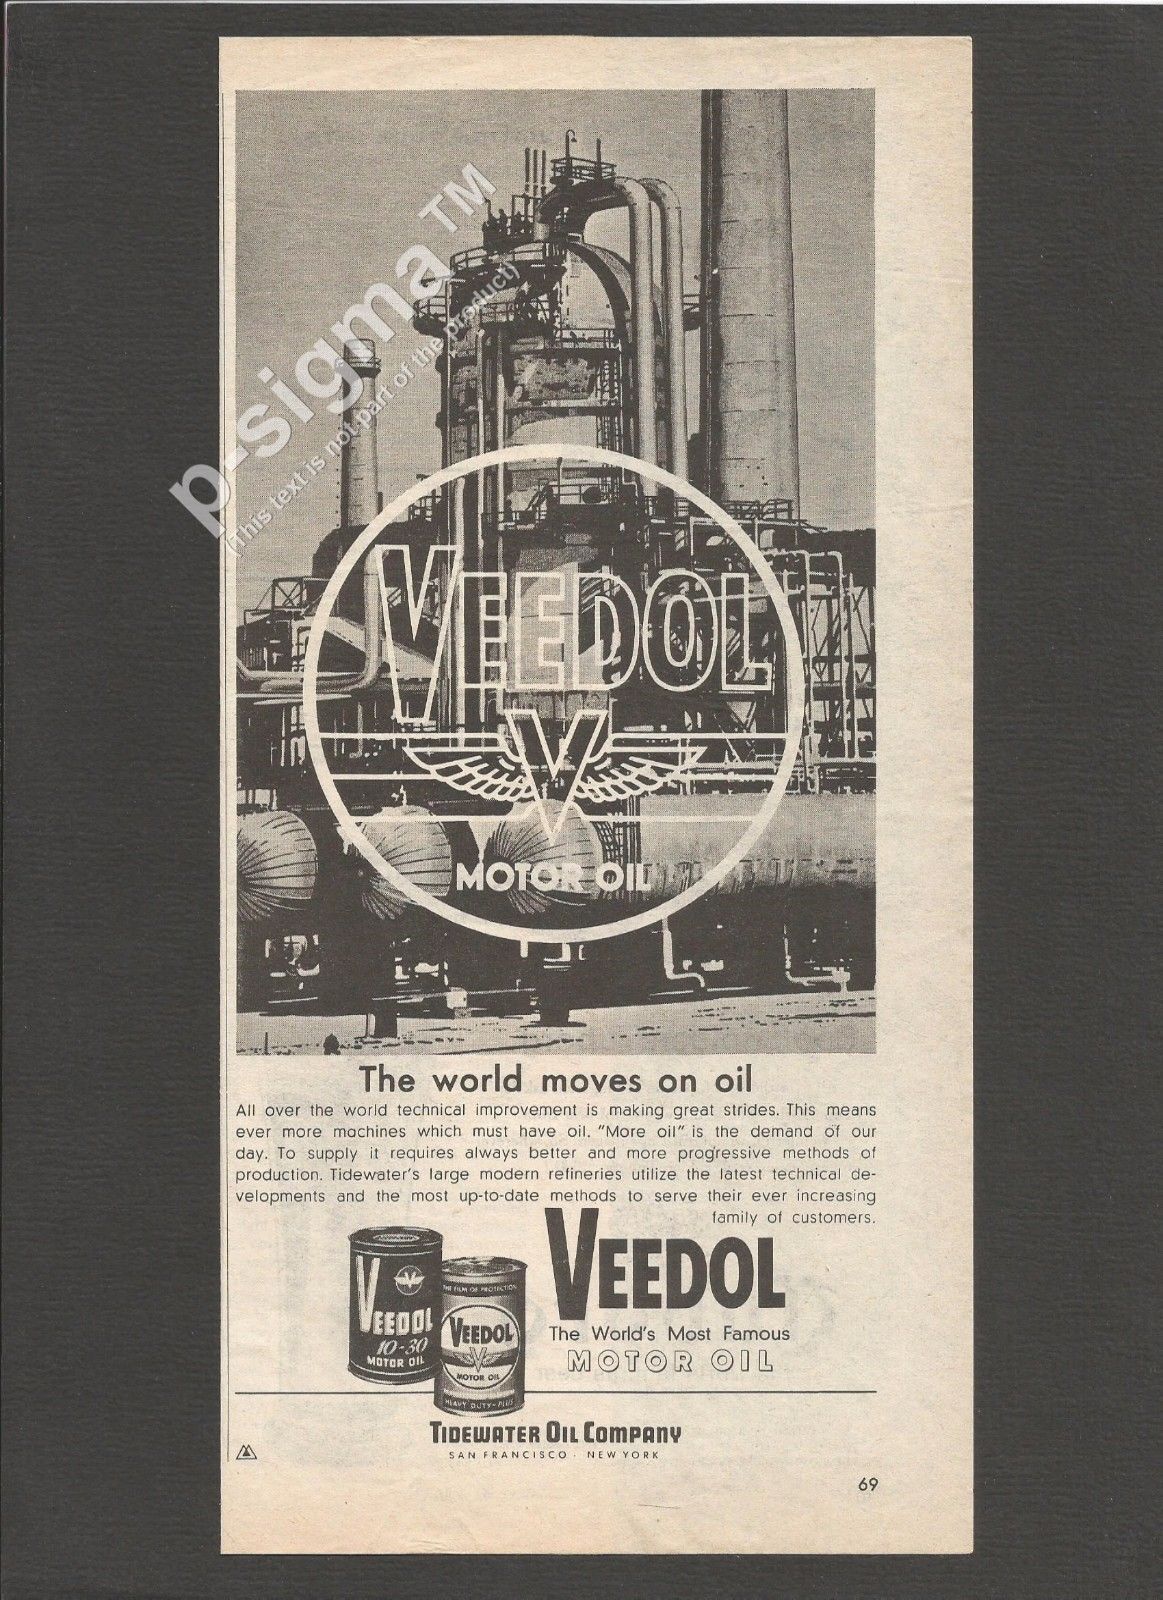 VEEDOL MOTOR OIL by Tidewater Oil Company  - 1957 Vintage Print Ad